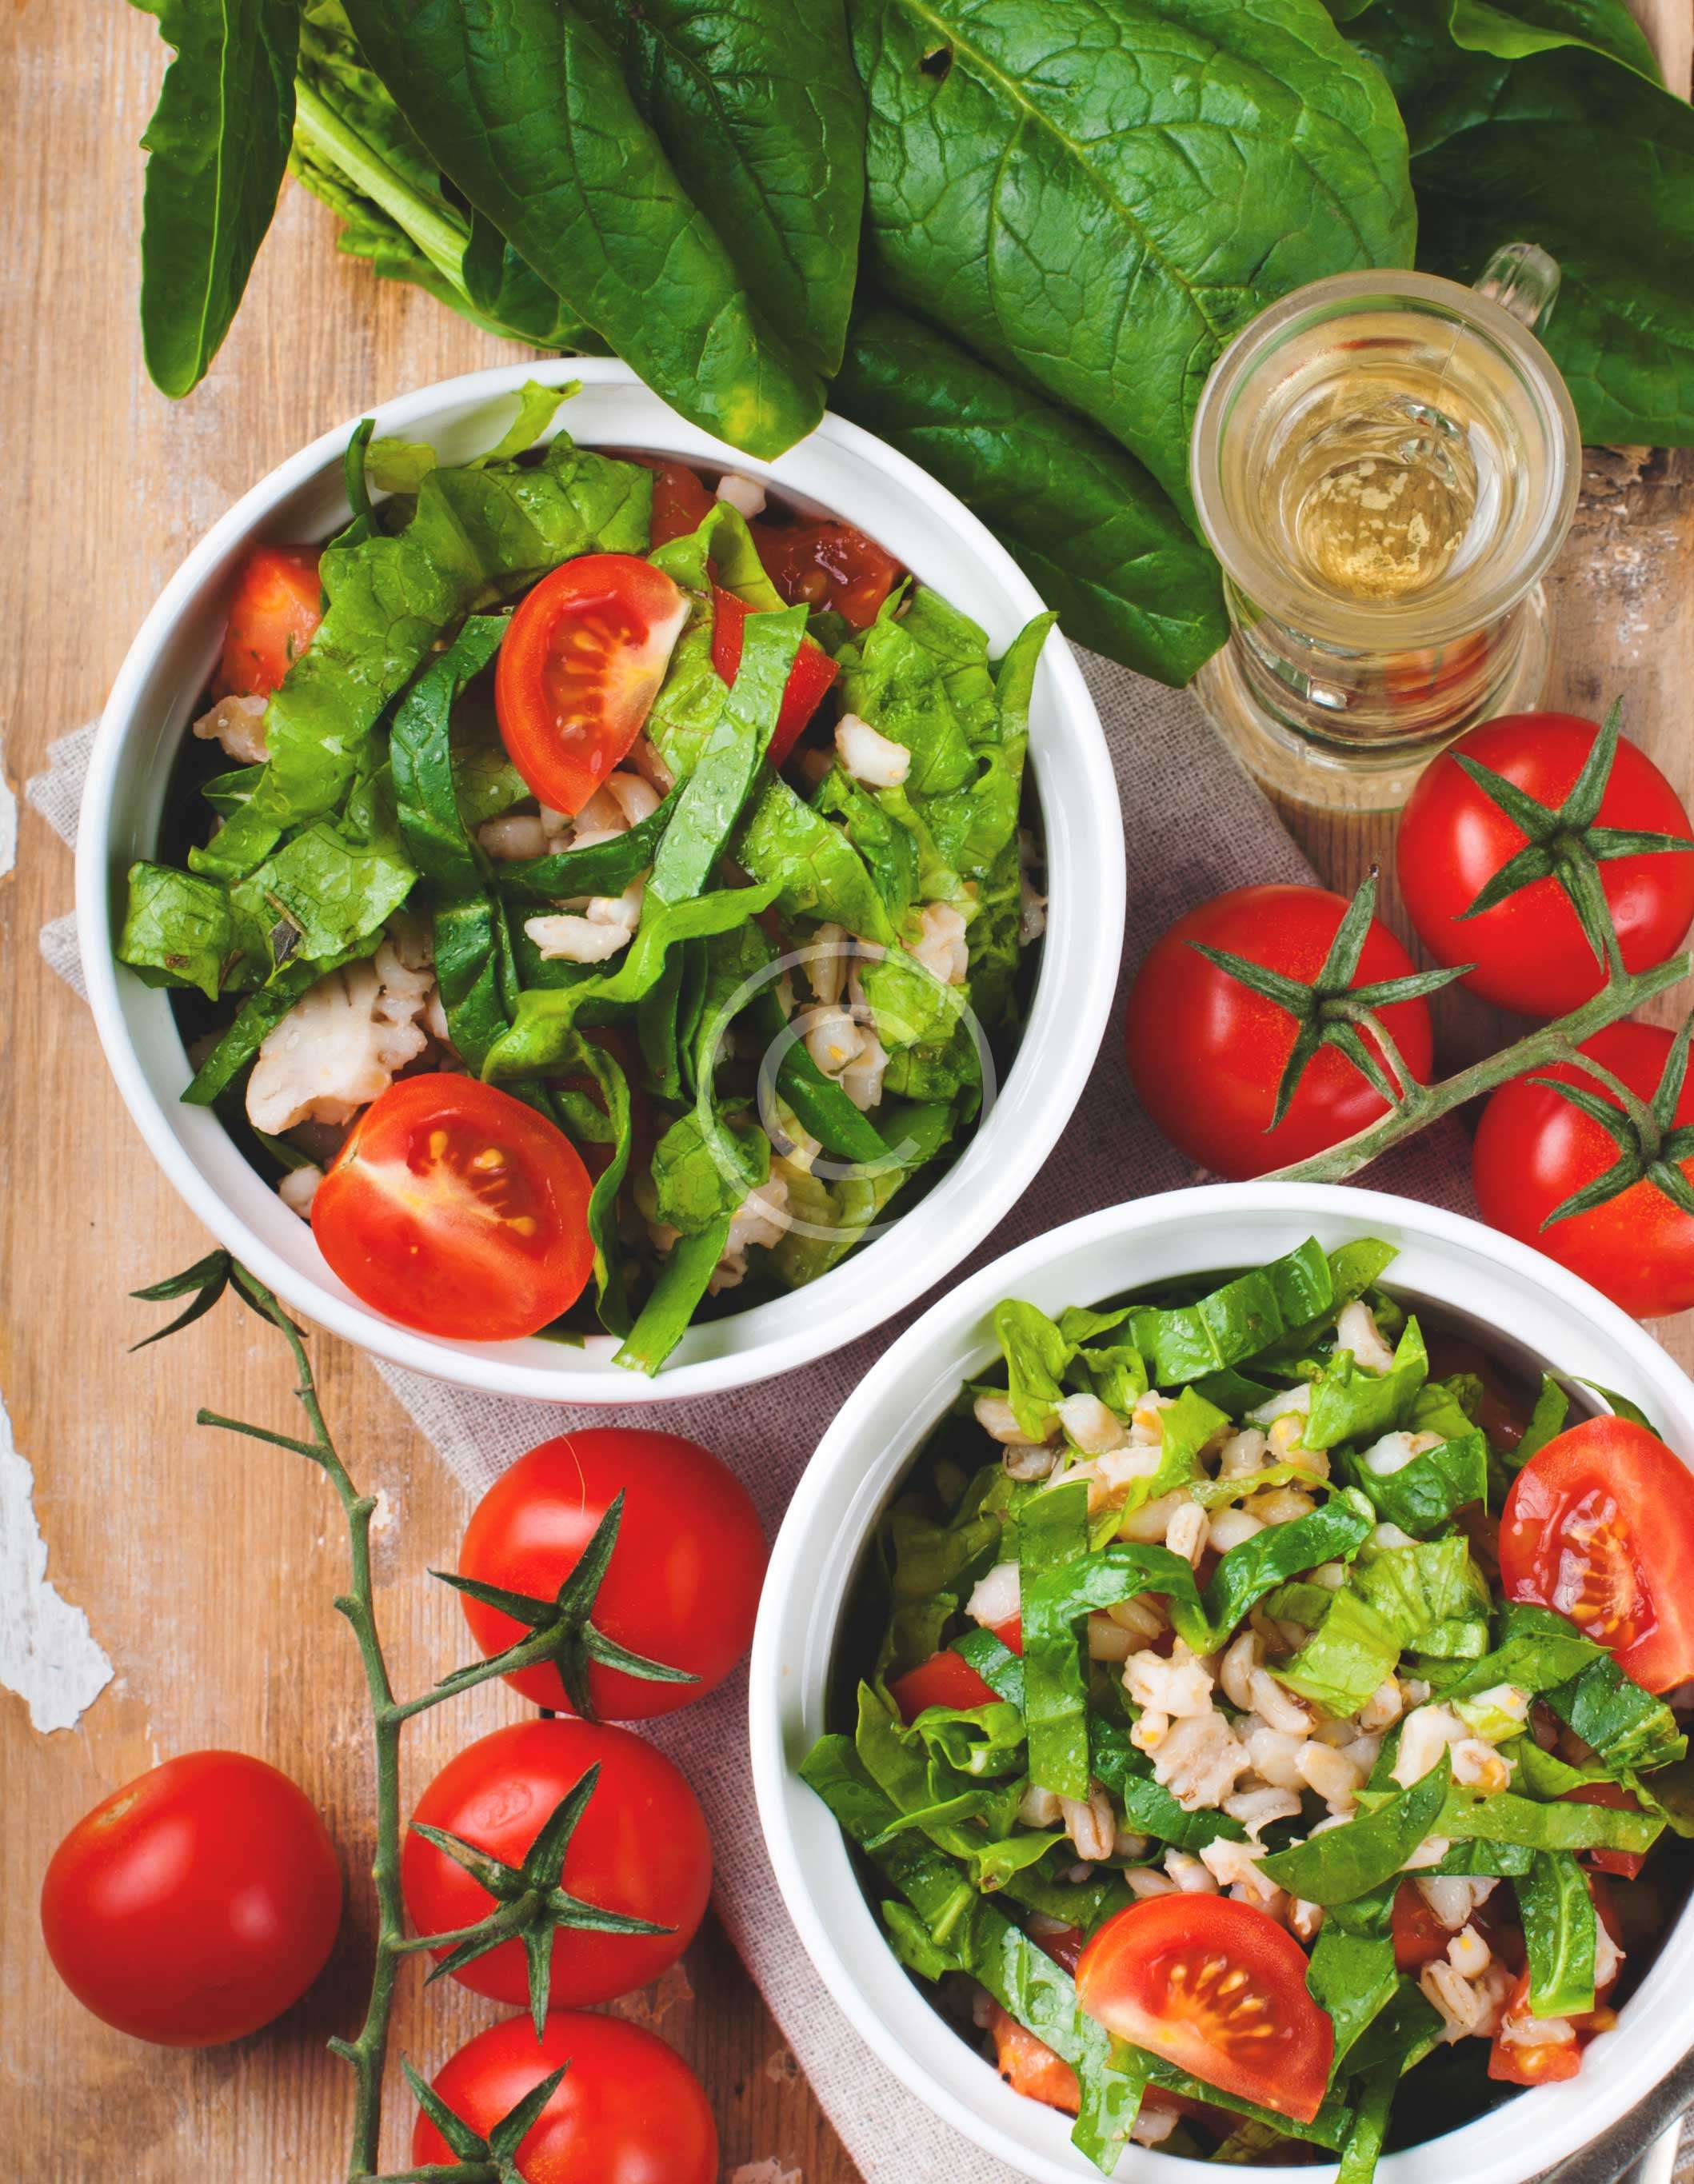 Incongruous salad mixes and recipes